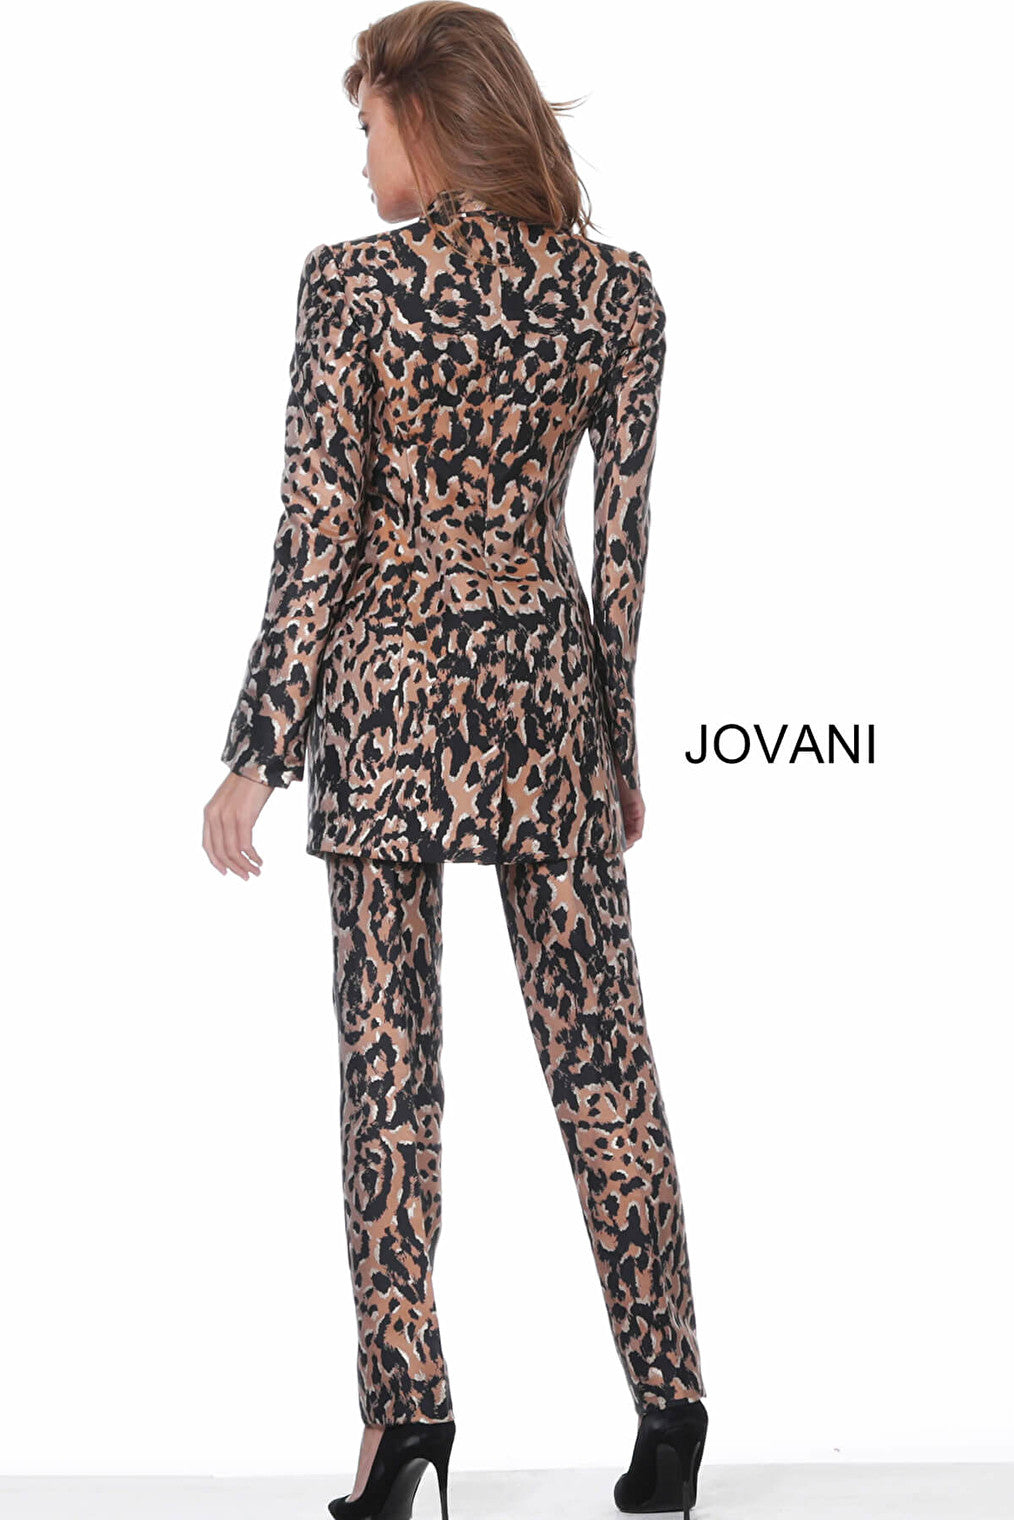 Multi print 03840 Jovani pant suit